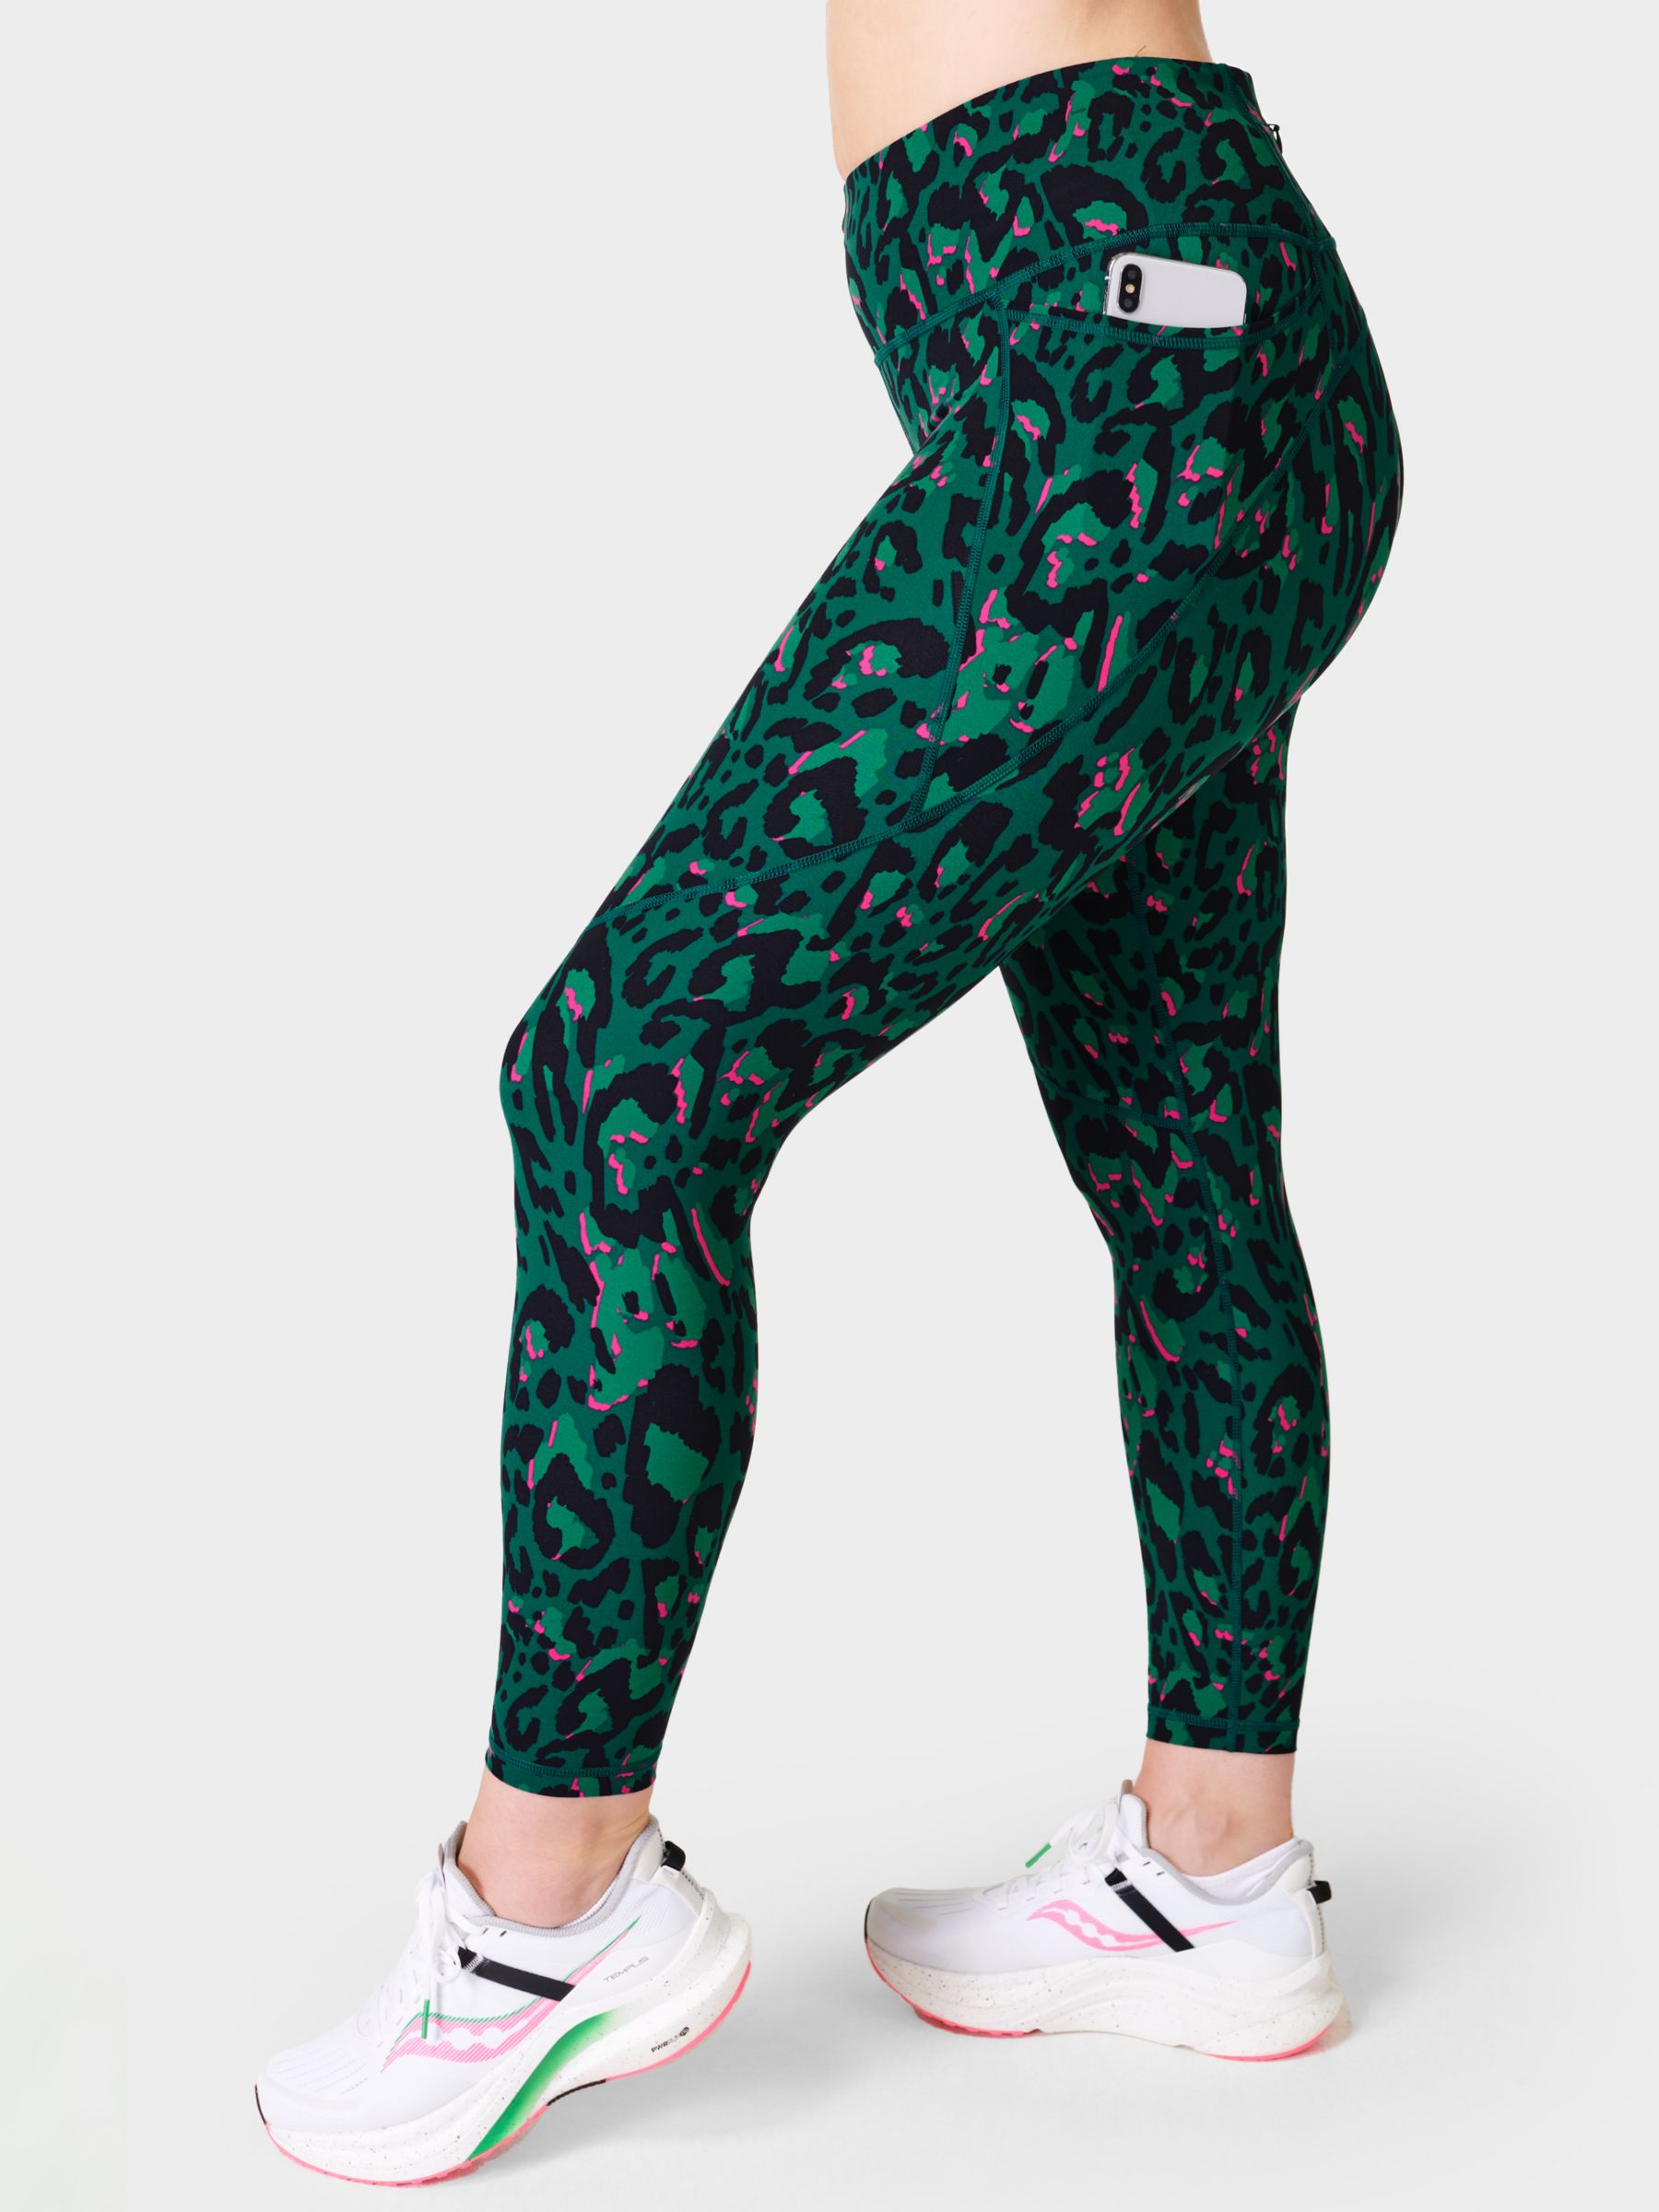 Women's Influential 7/8 Gym Leggings - Lilypad Green Animal Print